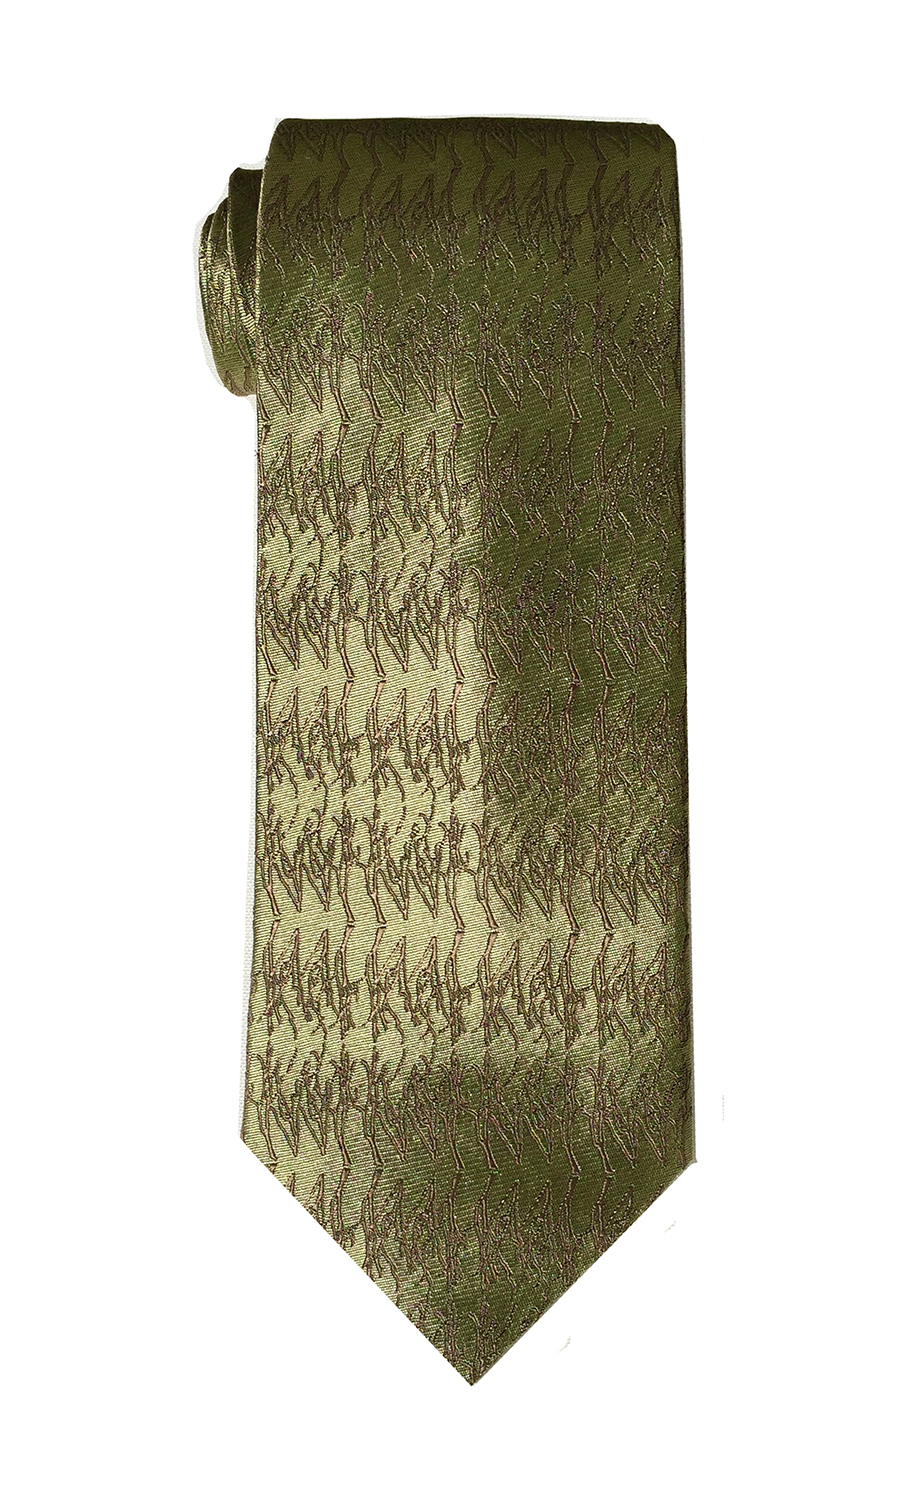 Winter Twig tie in willow green